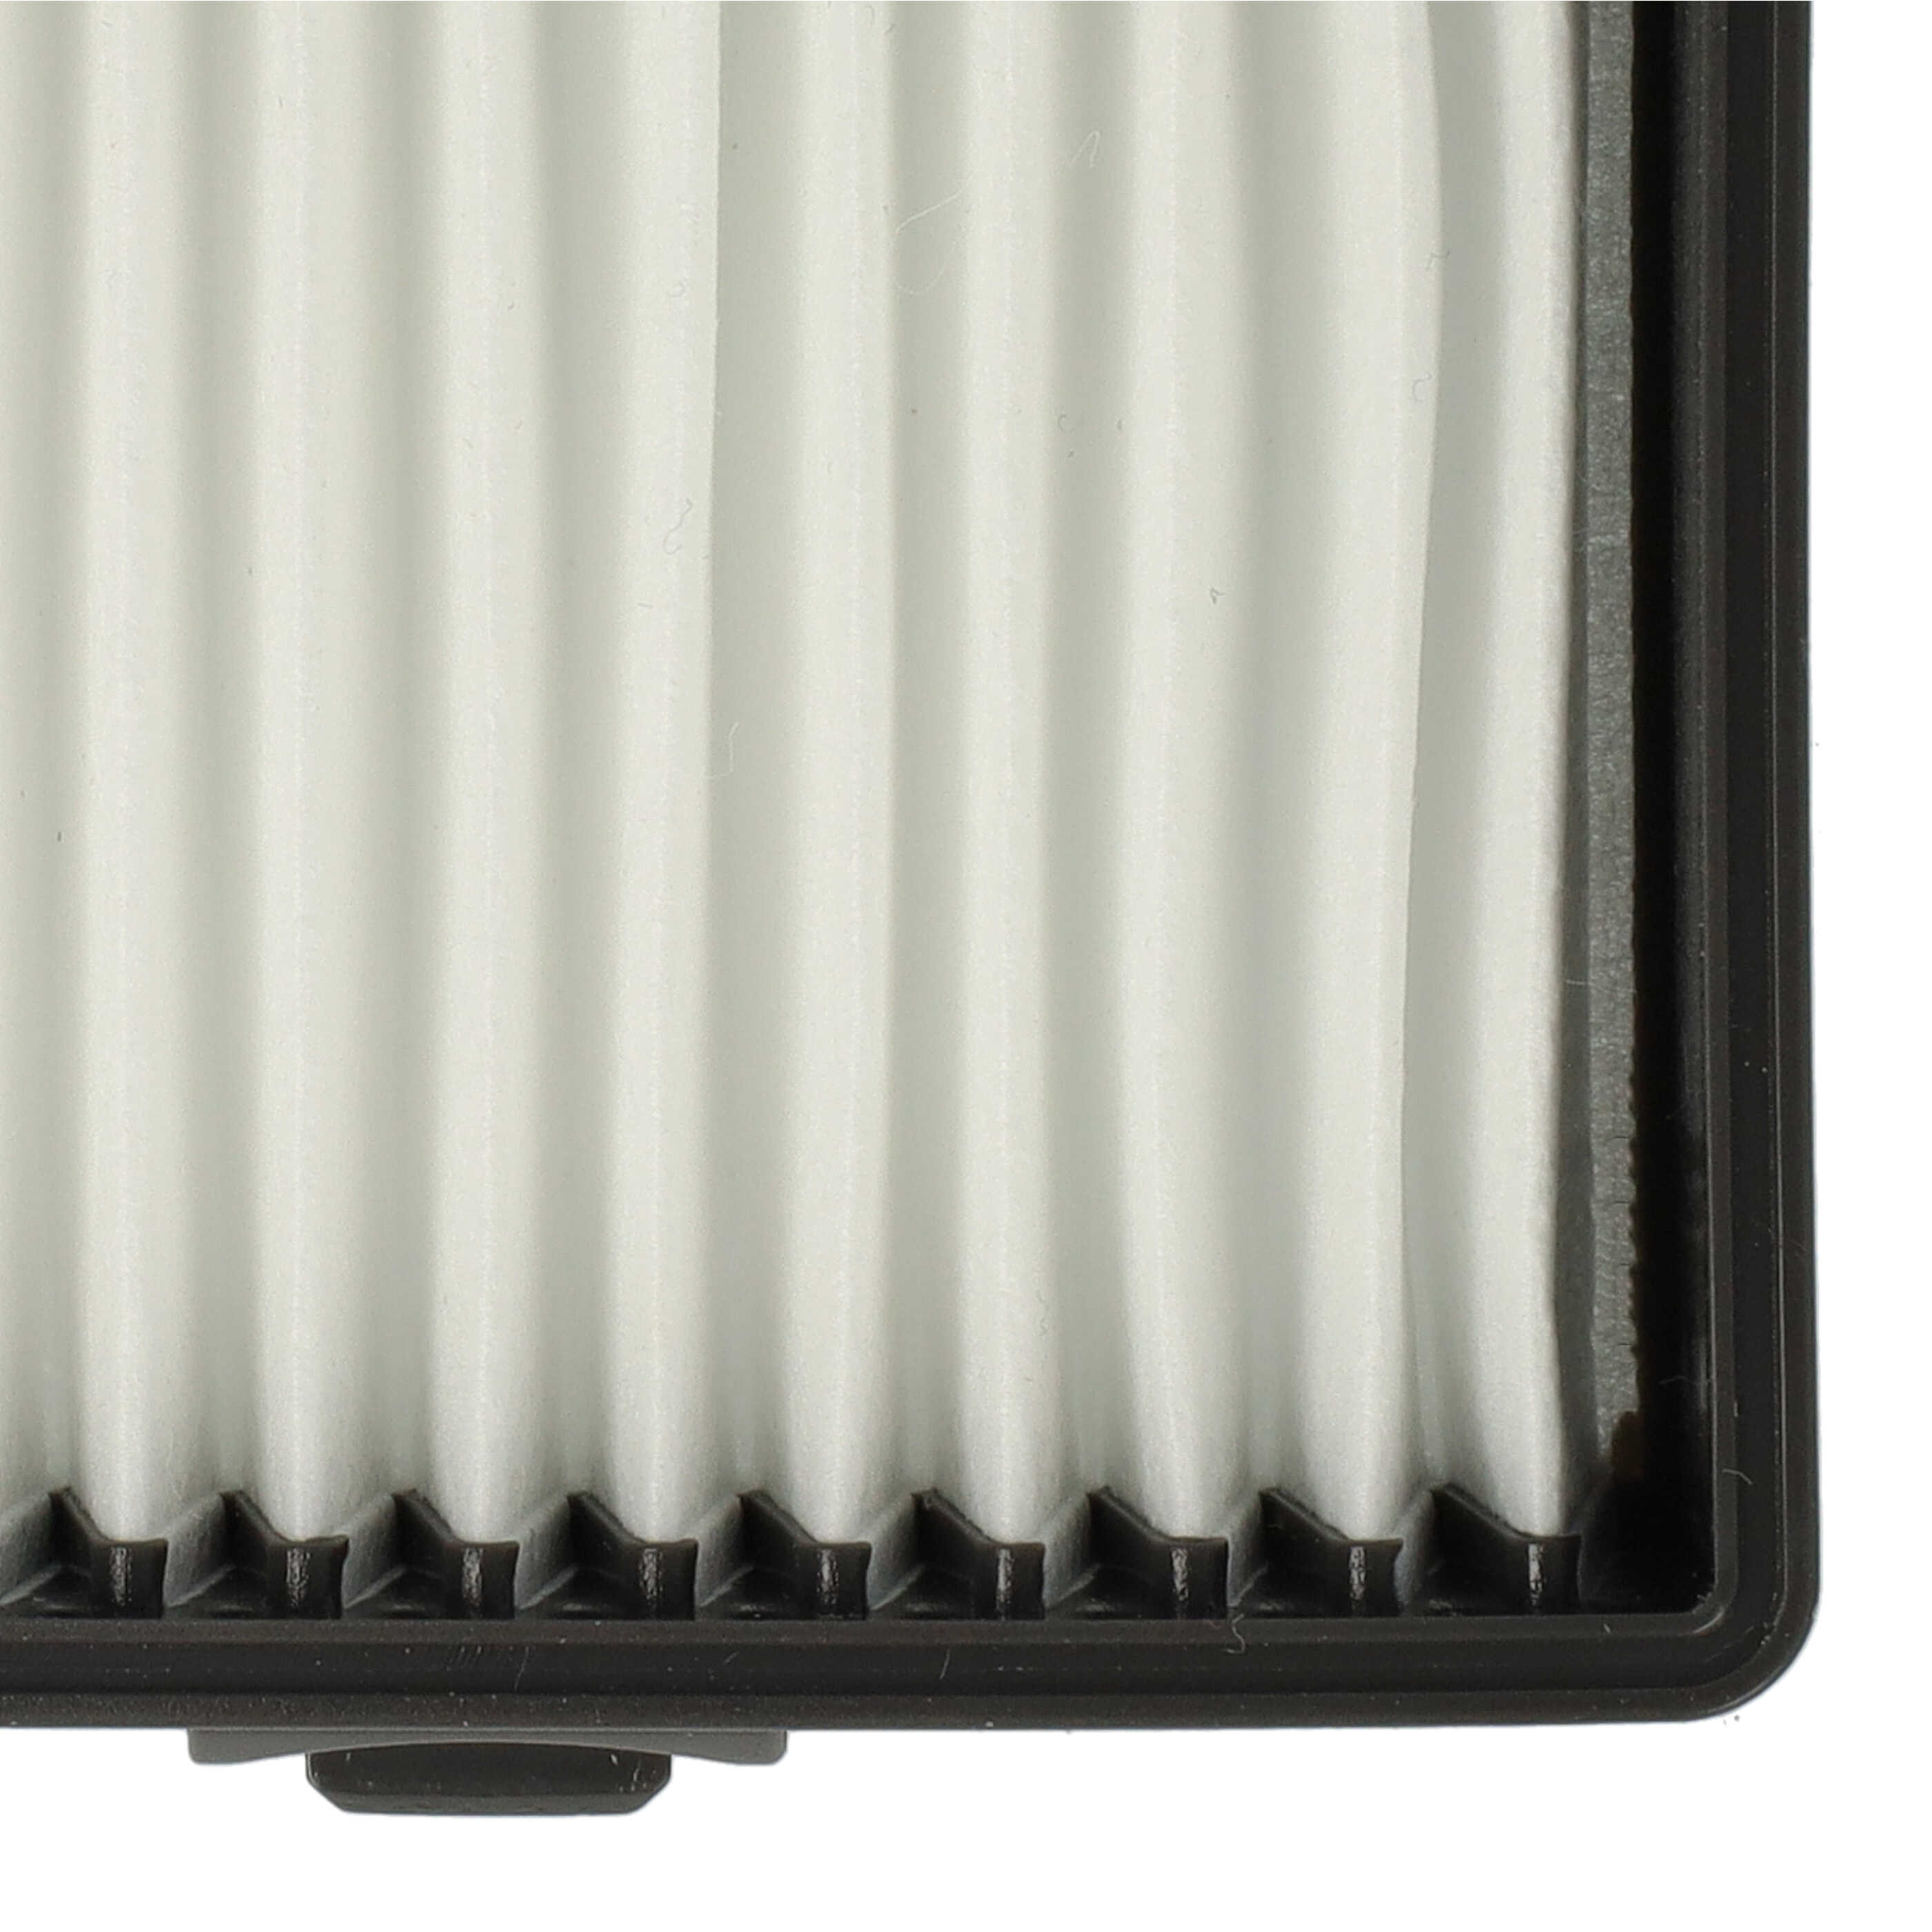 Filtre remplace Ryobi CHV 182, CHV 182 M, CHV182, CHV182M pour aspirateur - filtre de rechange